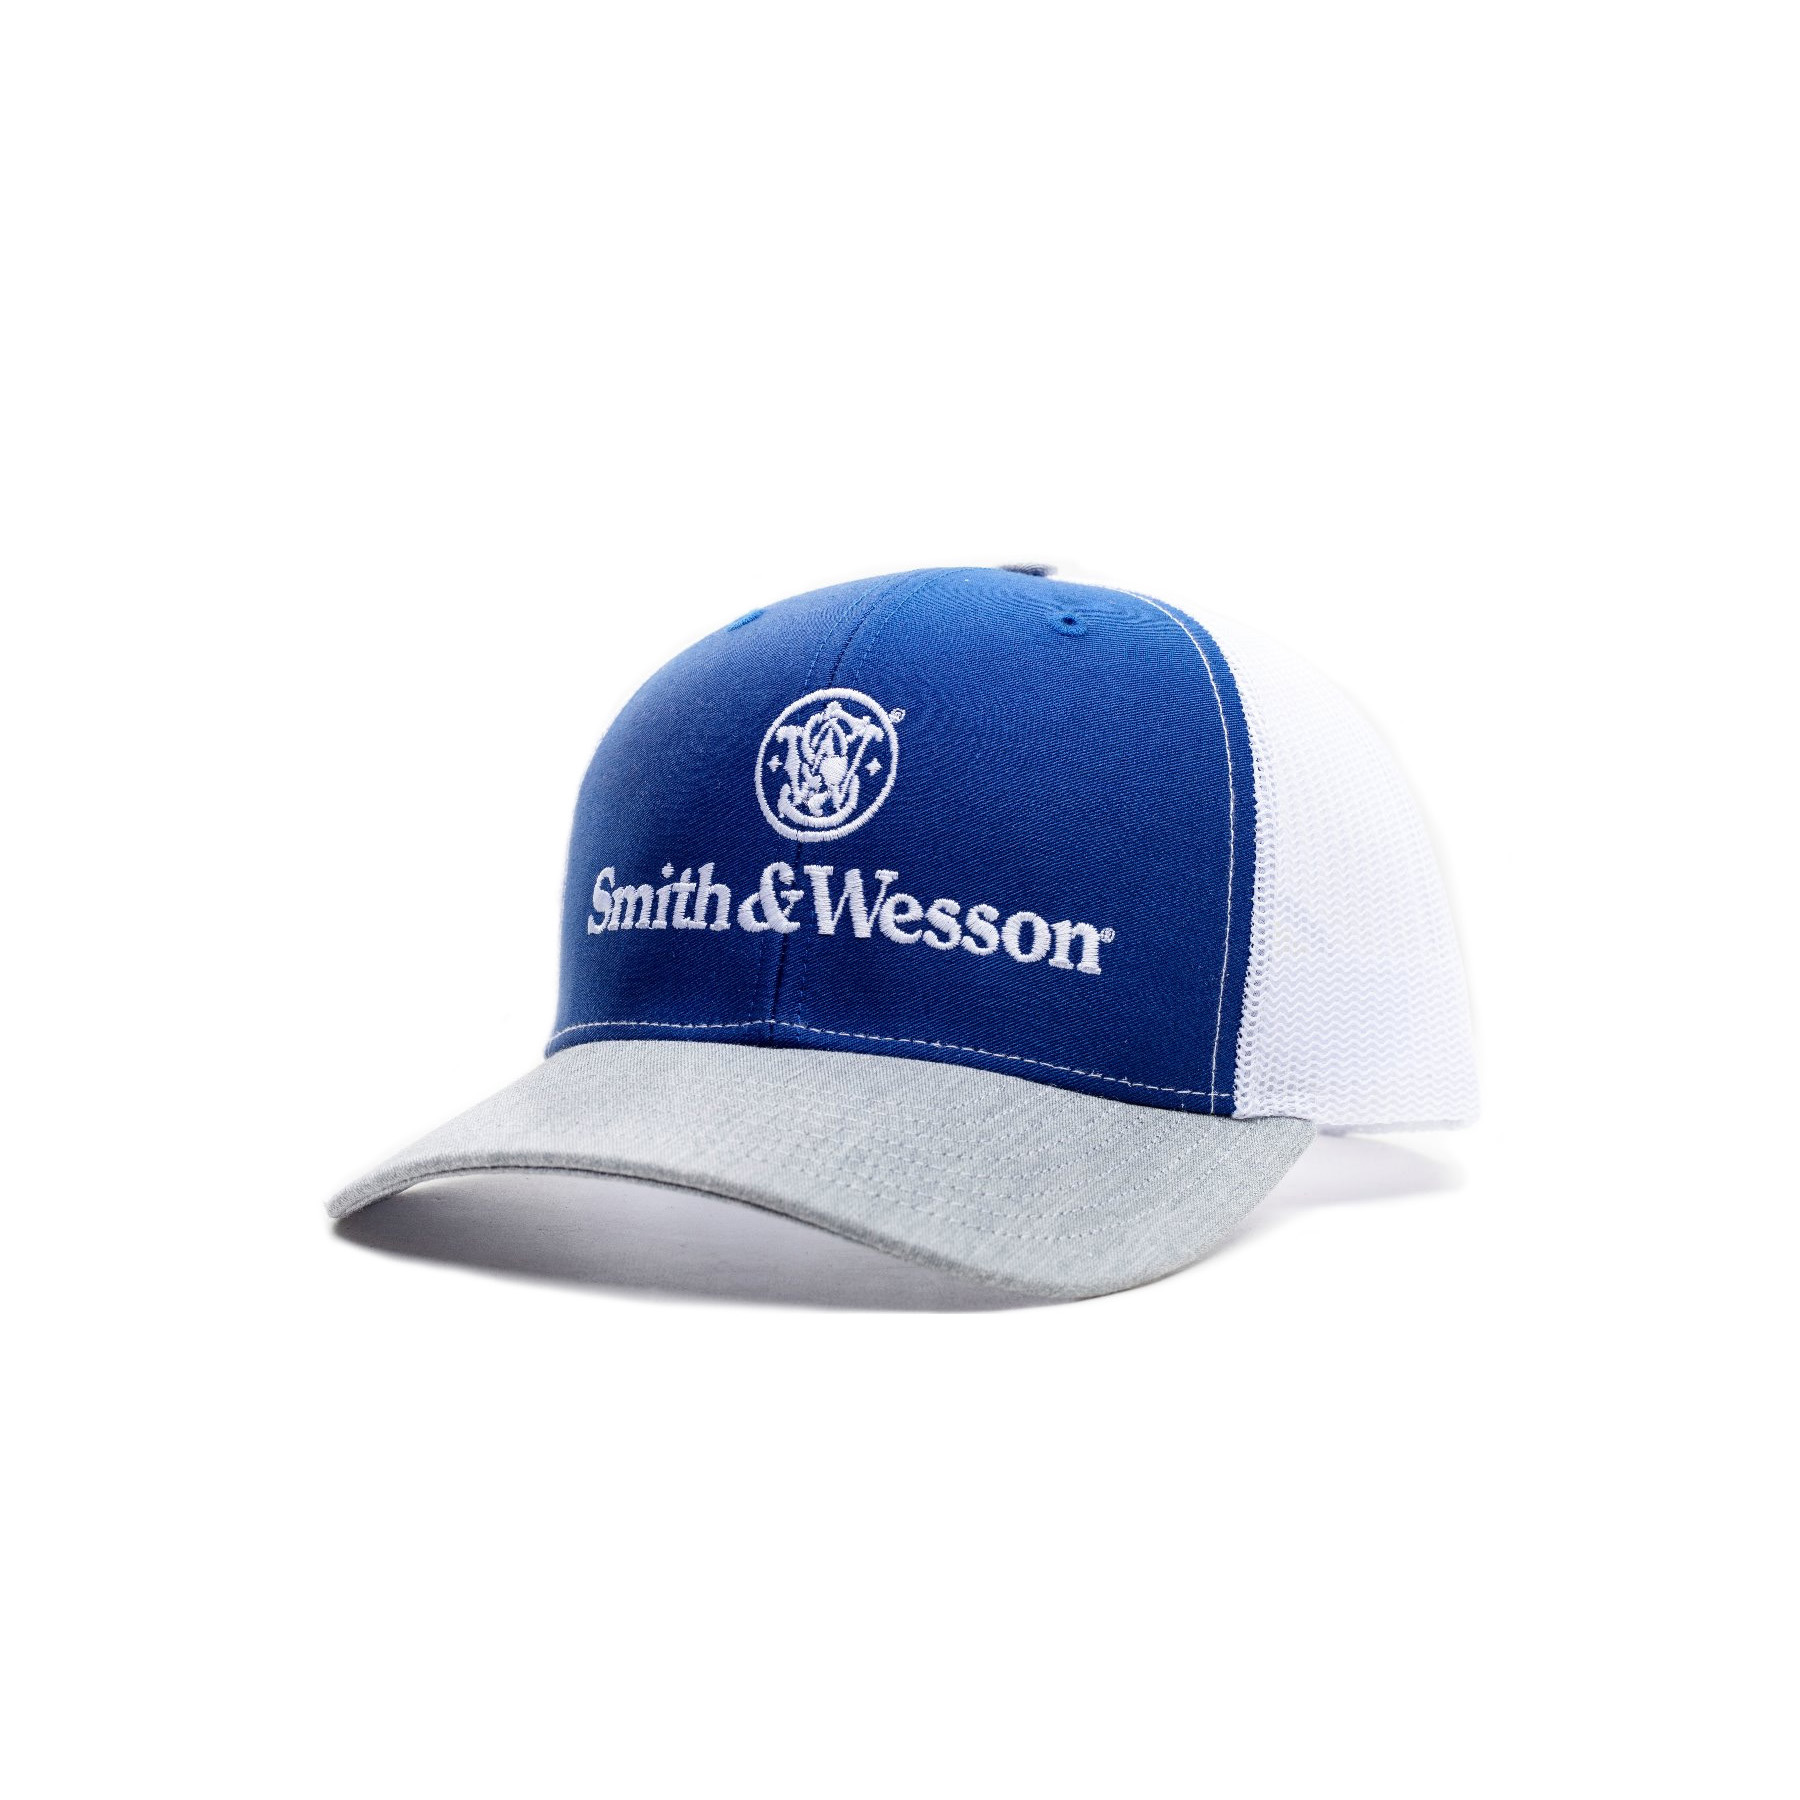 Smith & Wesson Baseball Cap 